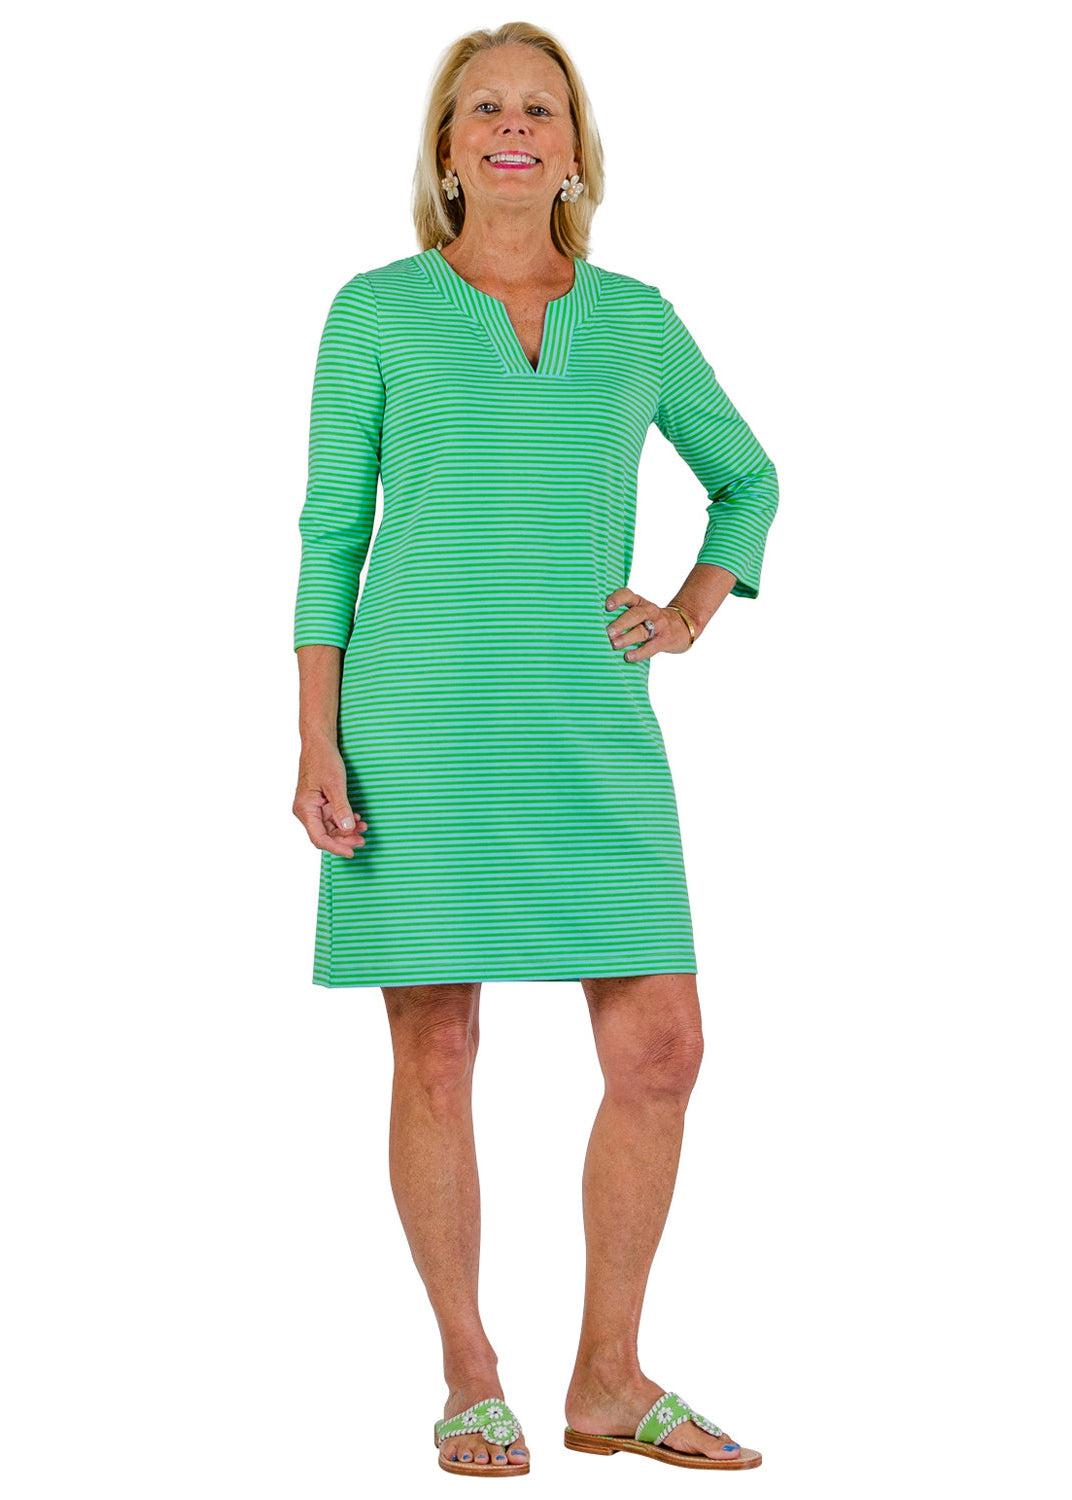 Lucille Dress 3/4 - Juicy Stripe Turq/Green